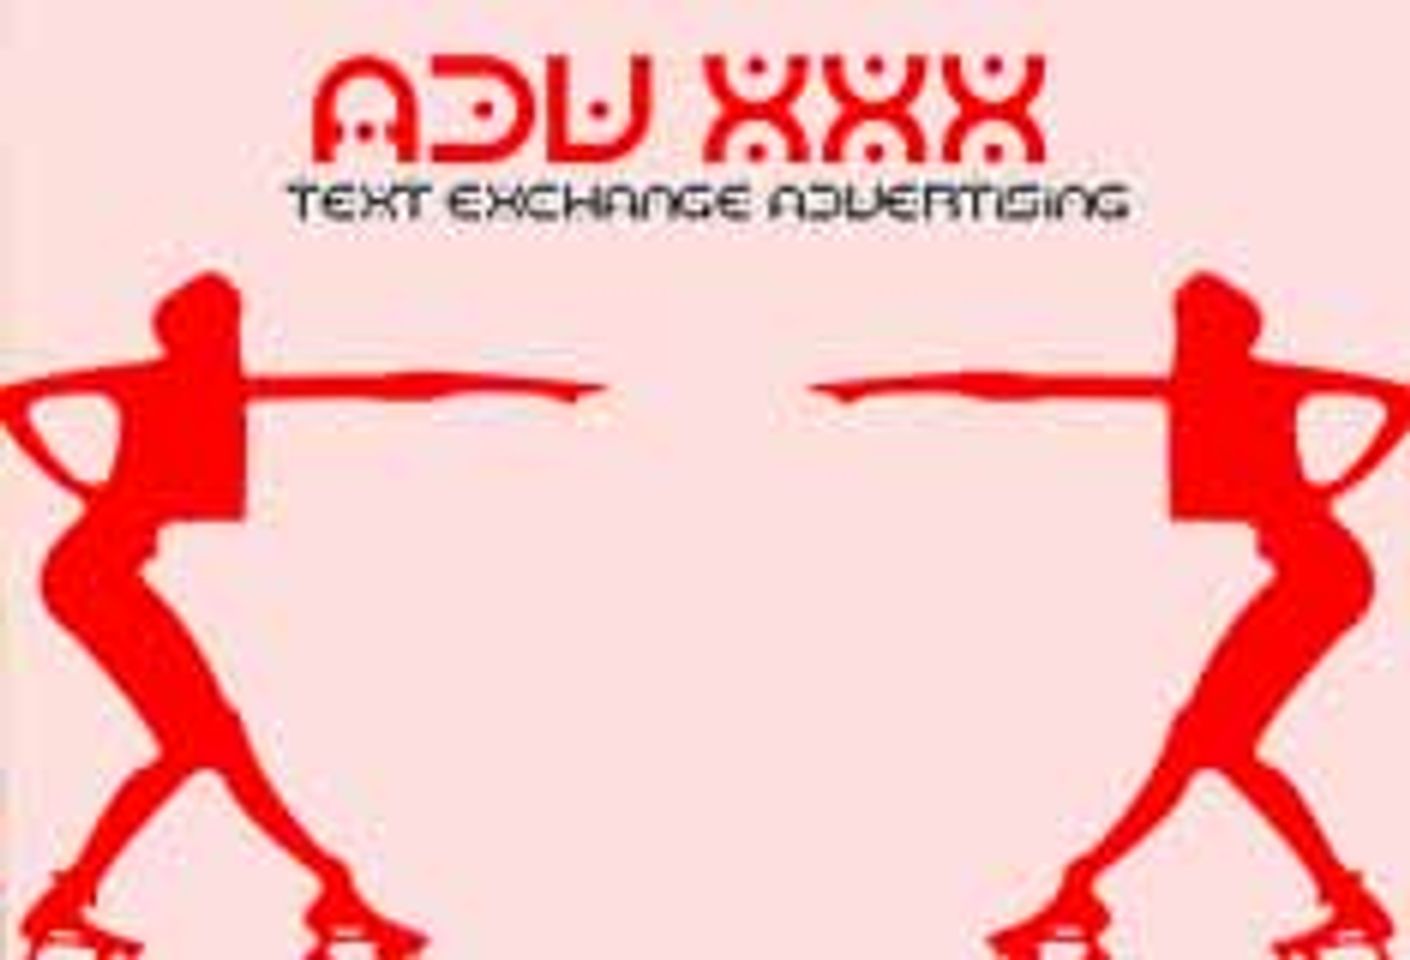 ADVxXx Launches new Adult Text Link Exchange Service